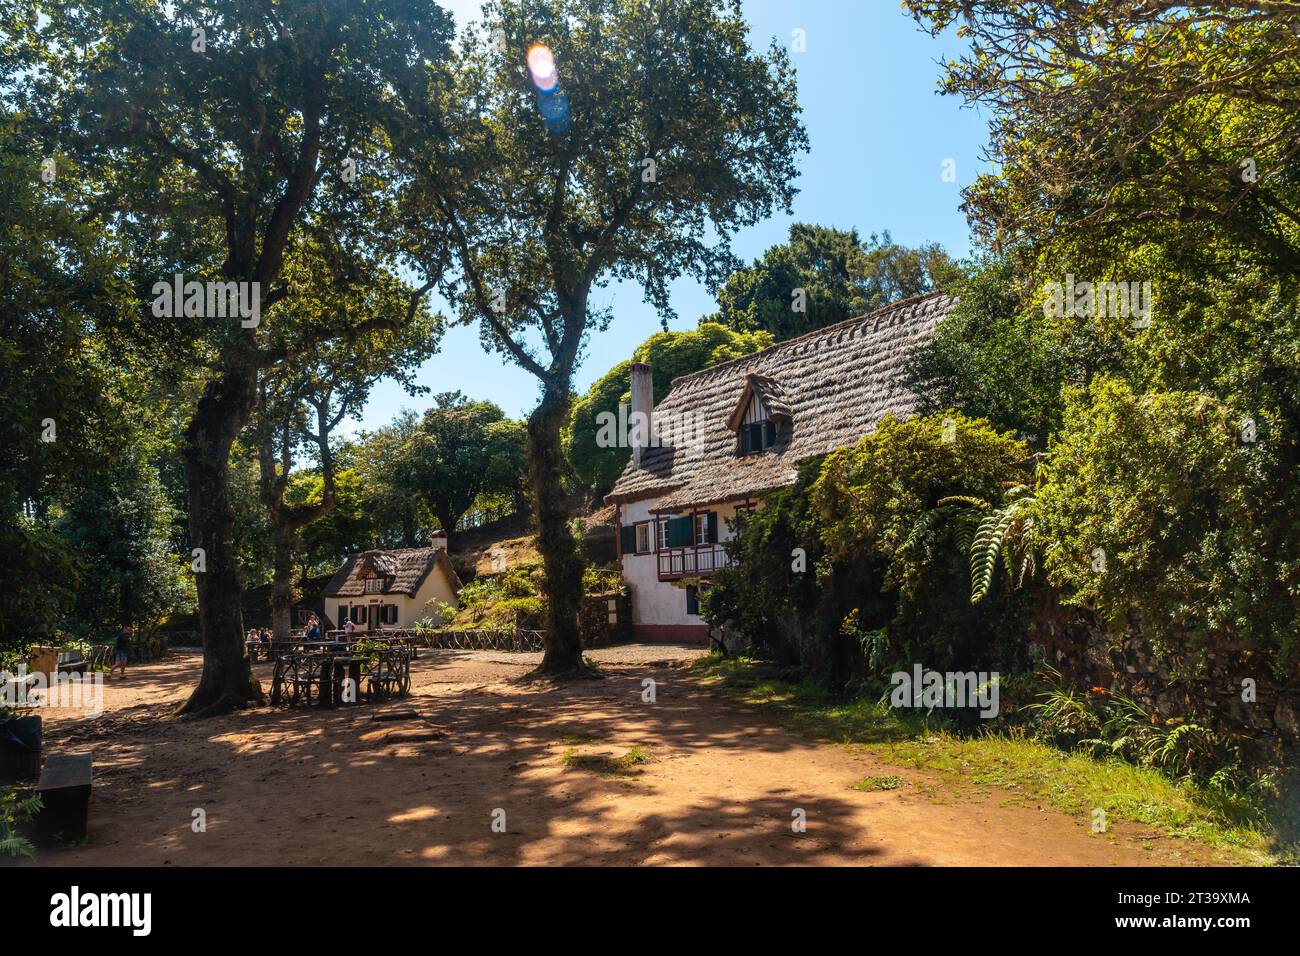 Schöne Häuser in der Natur am Anfang der Levada do Caldeirao Verde, Queimadas, Madeira. Portugal Foto de stock